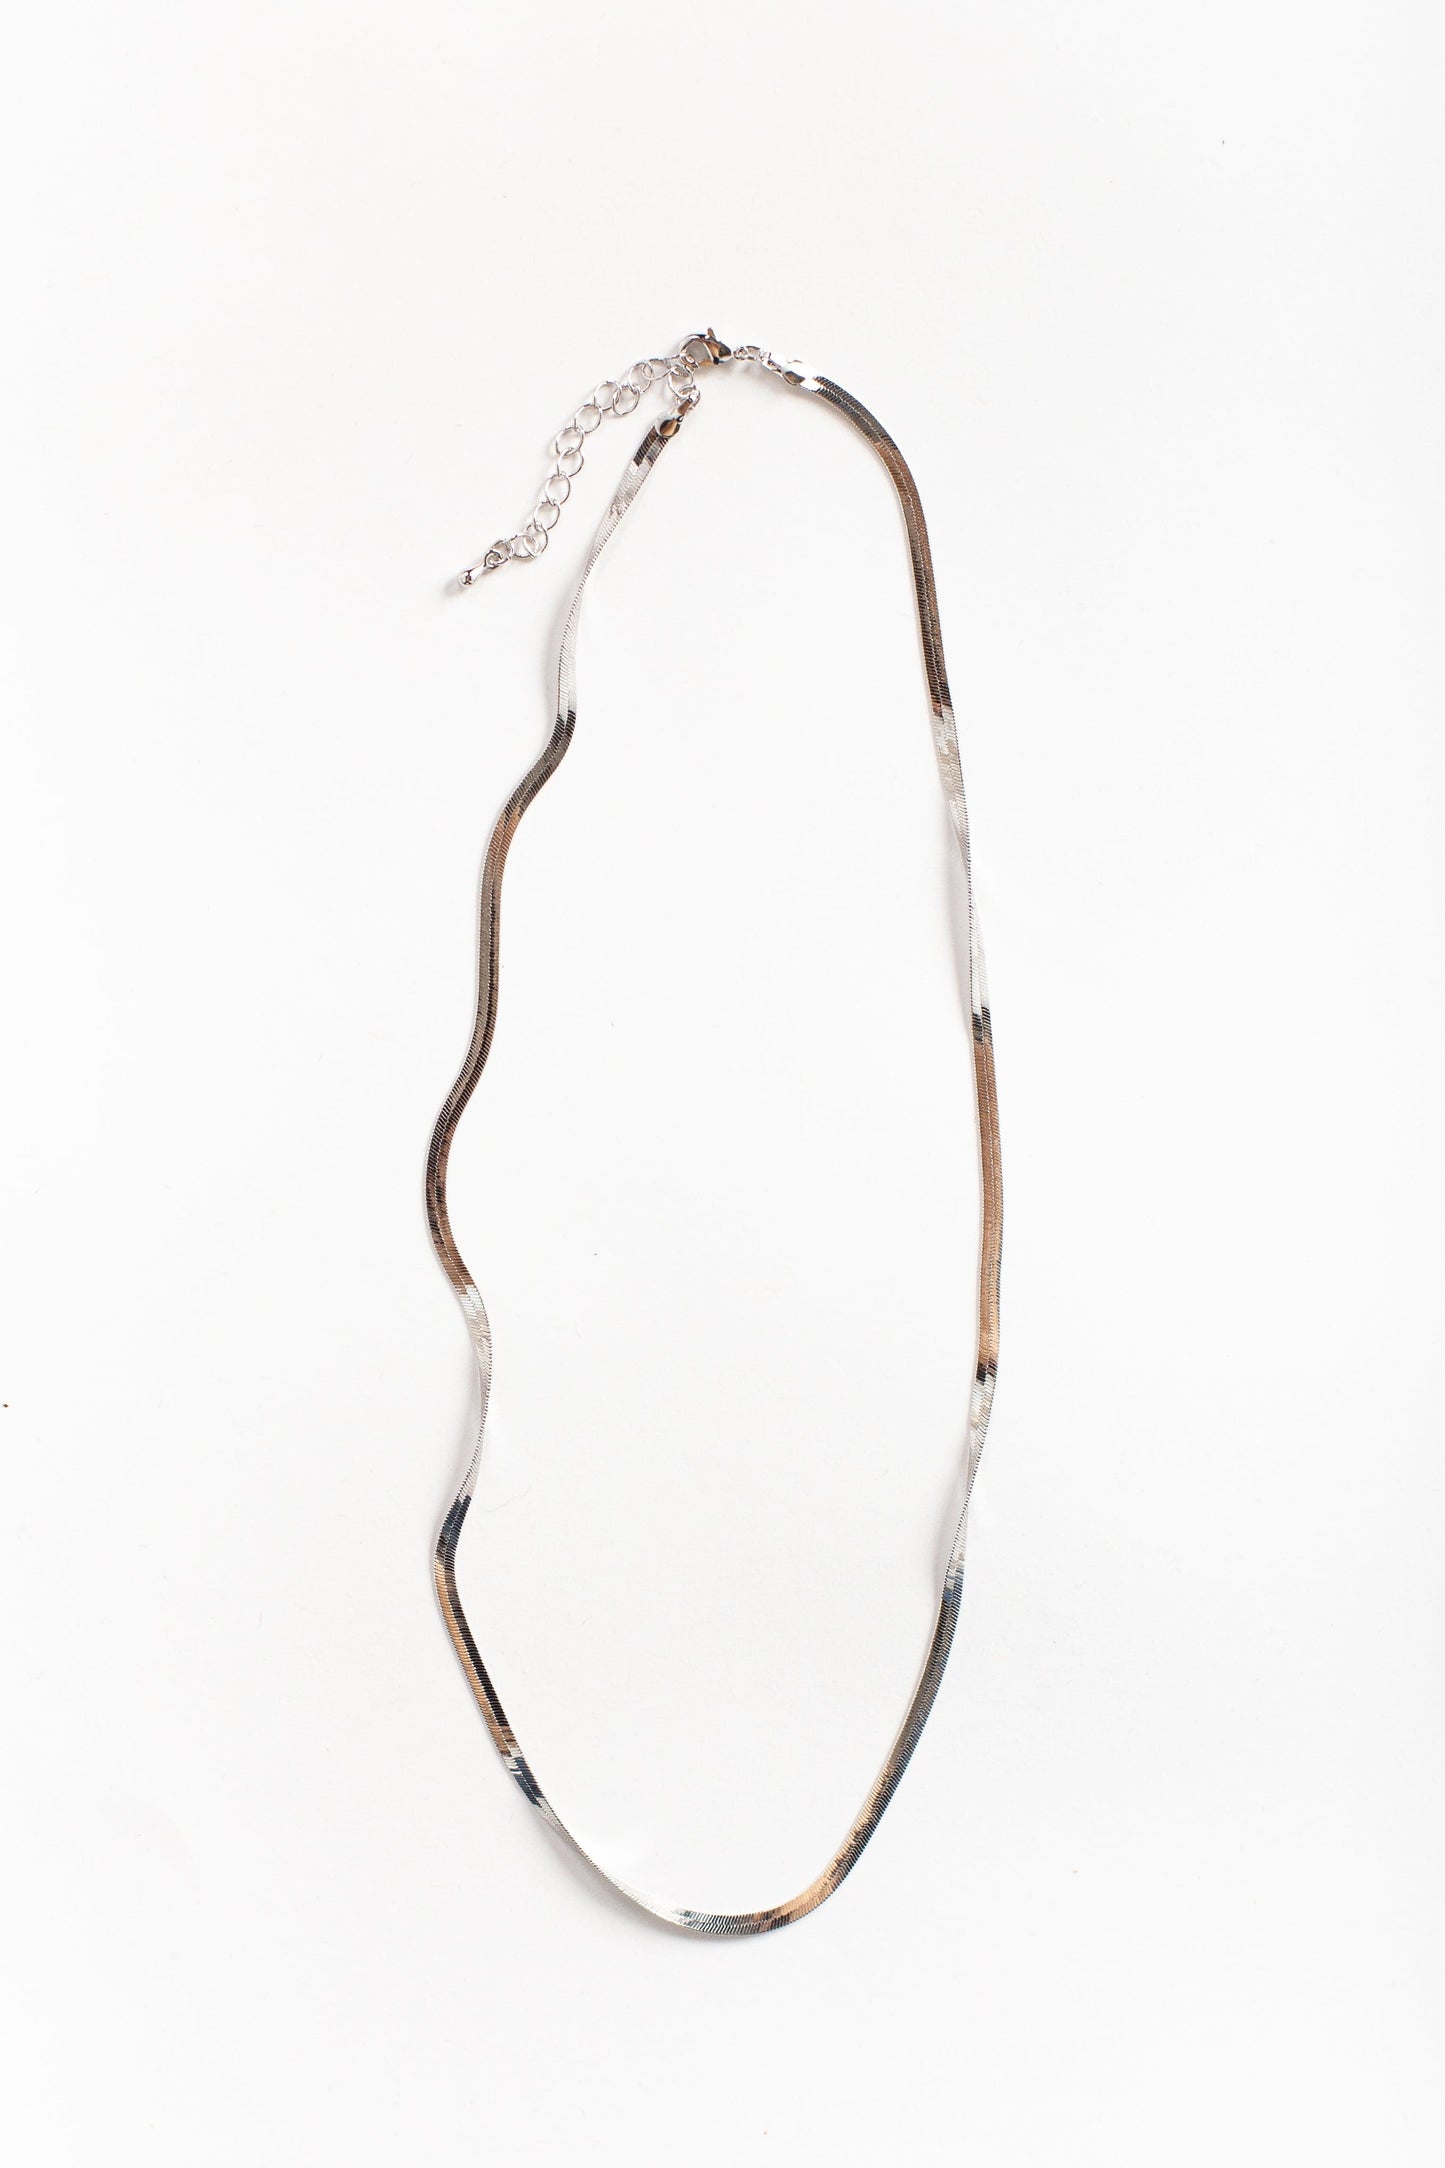 Herringbone Chain WOMEN'S NECKLACE Cove Silver Necklace 16"